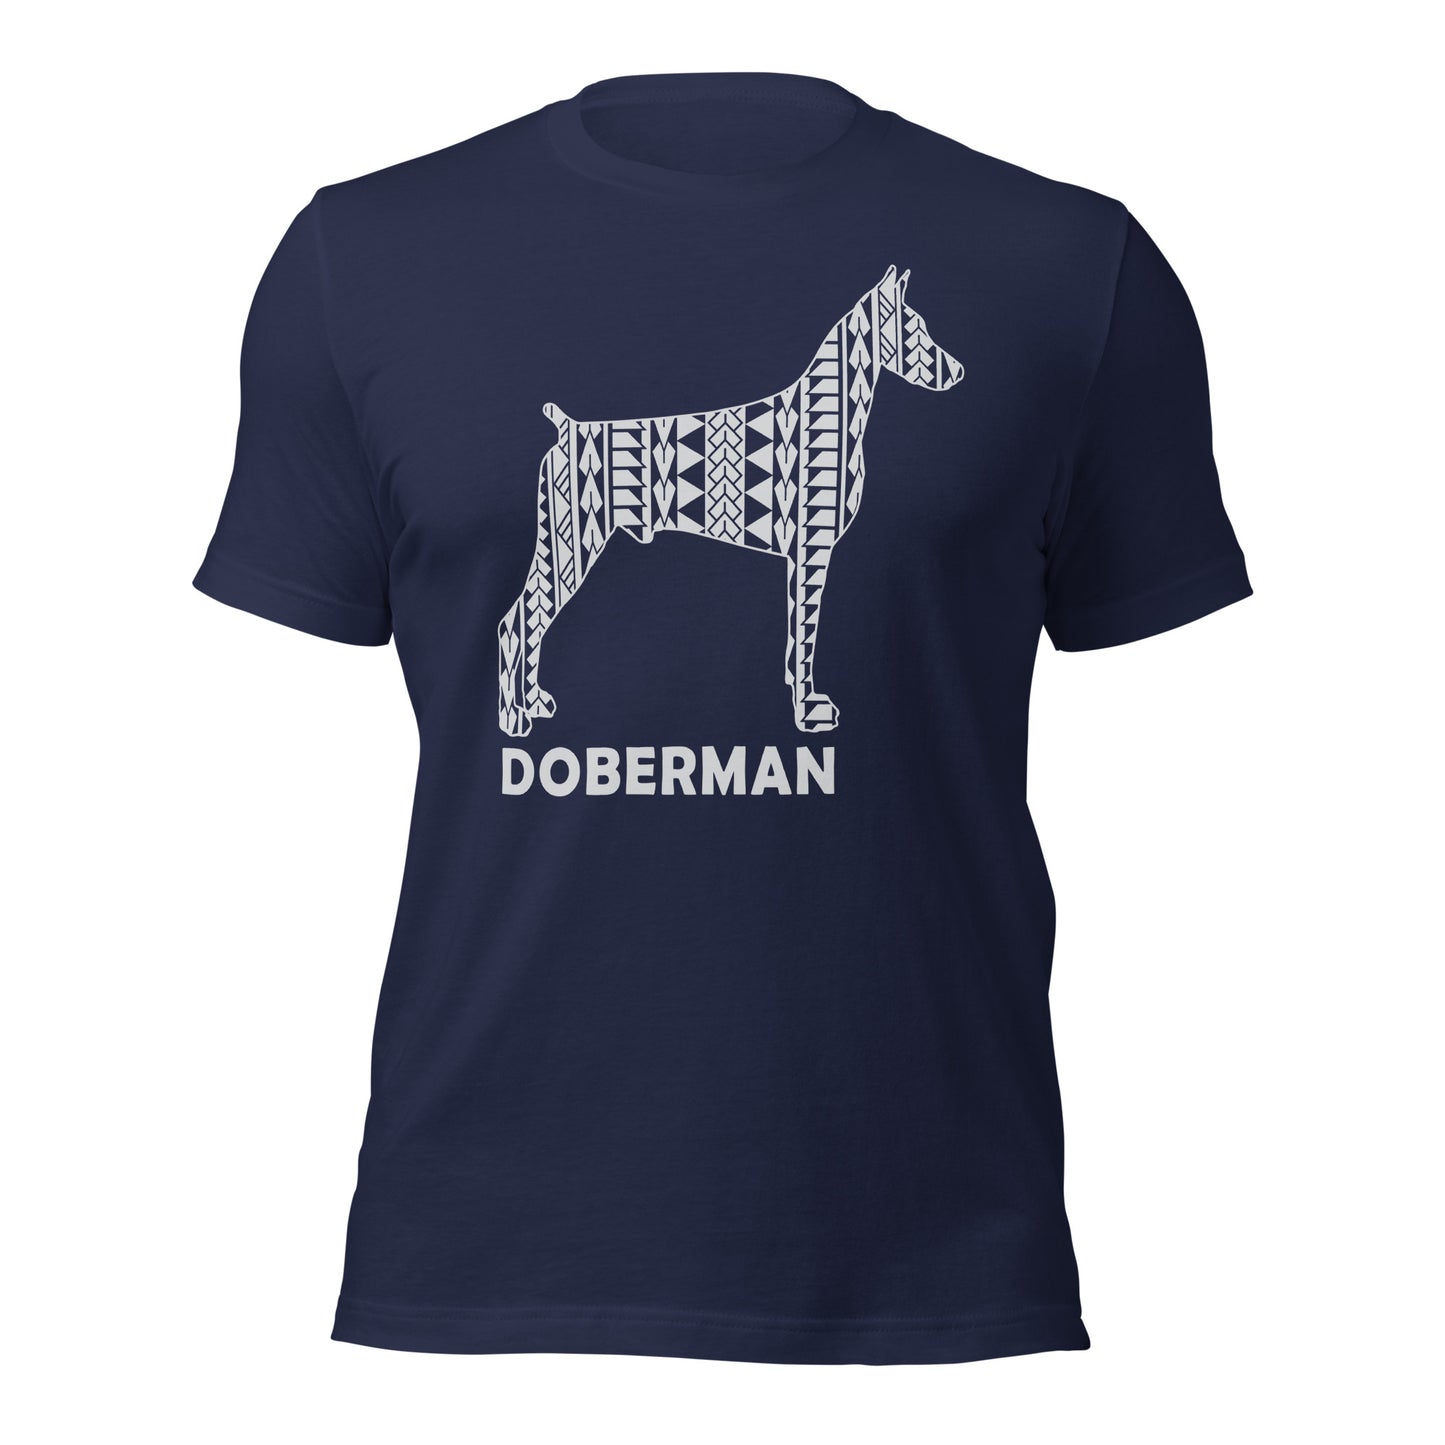 Doberman Polynesian t-shirt navy by Dog Artistry.